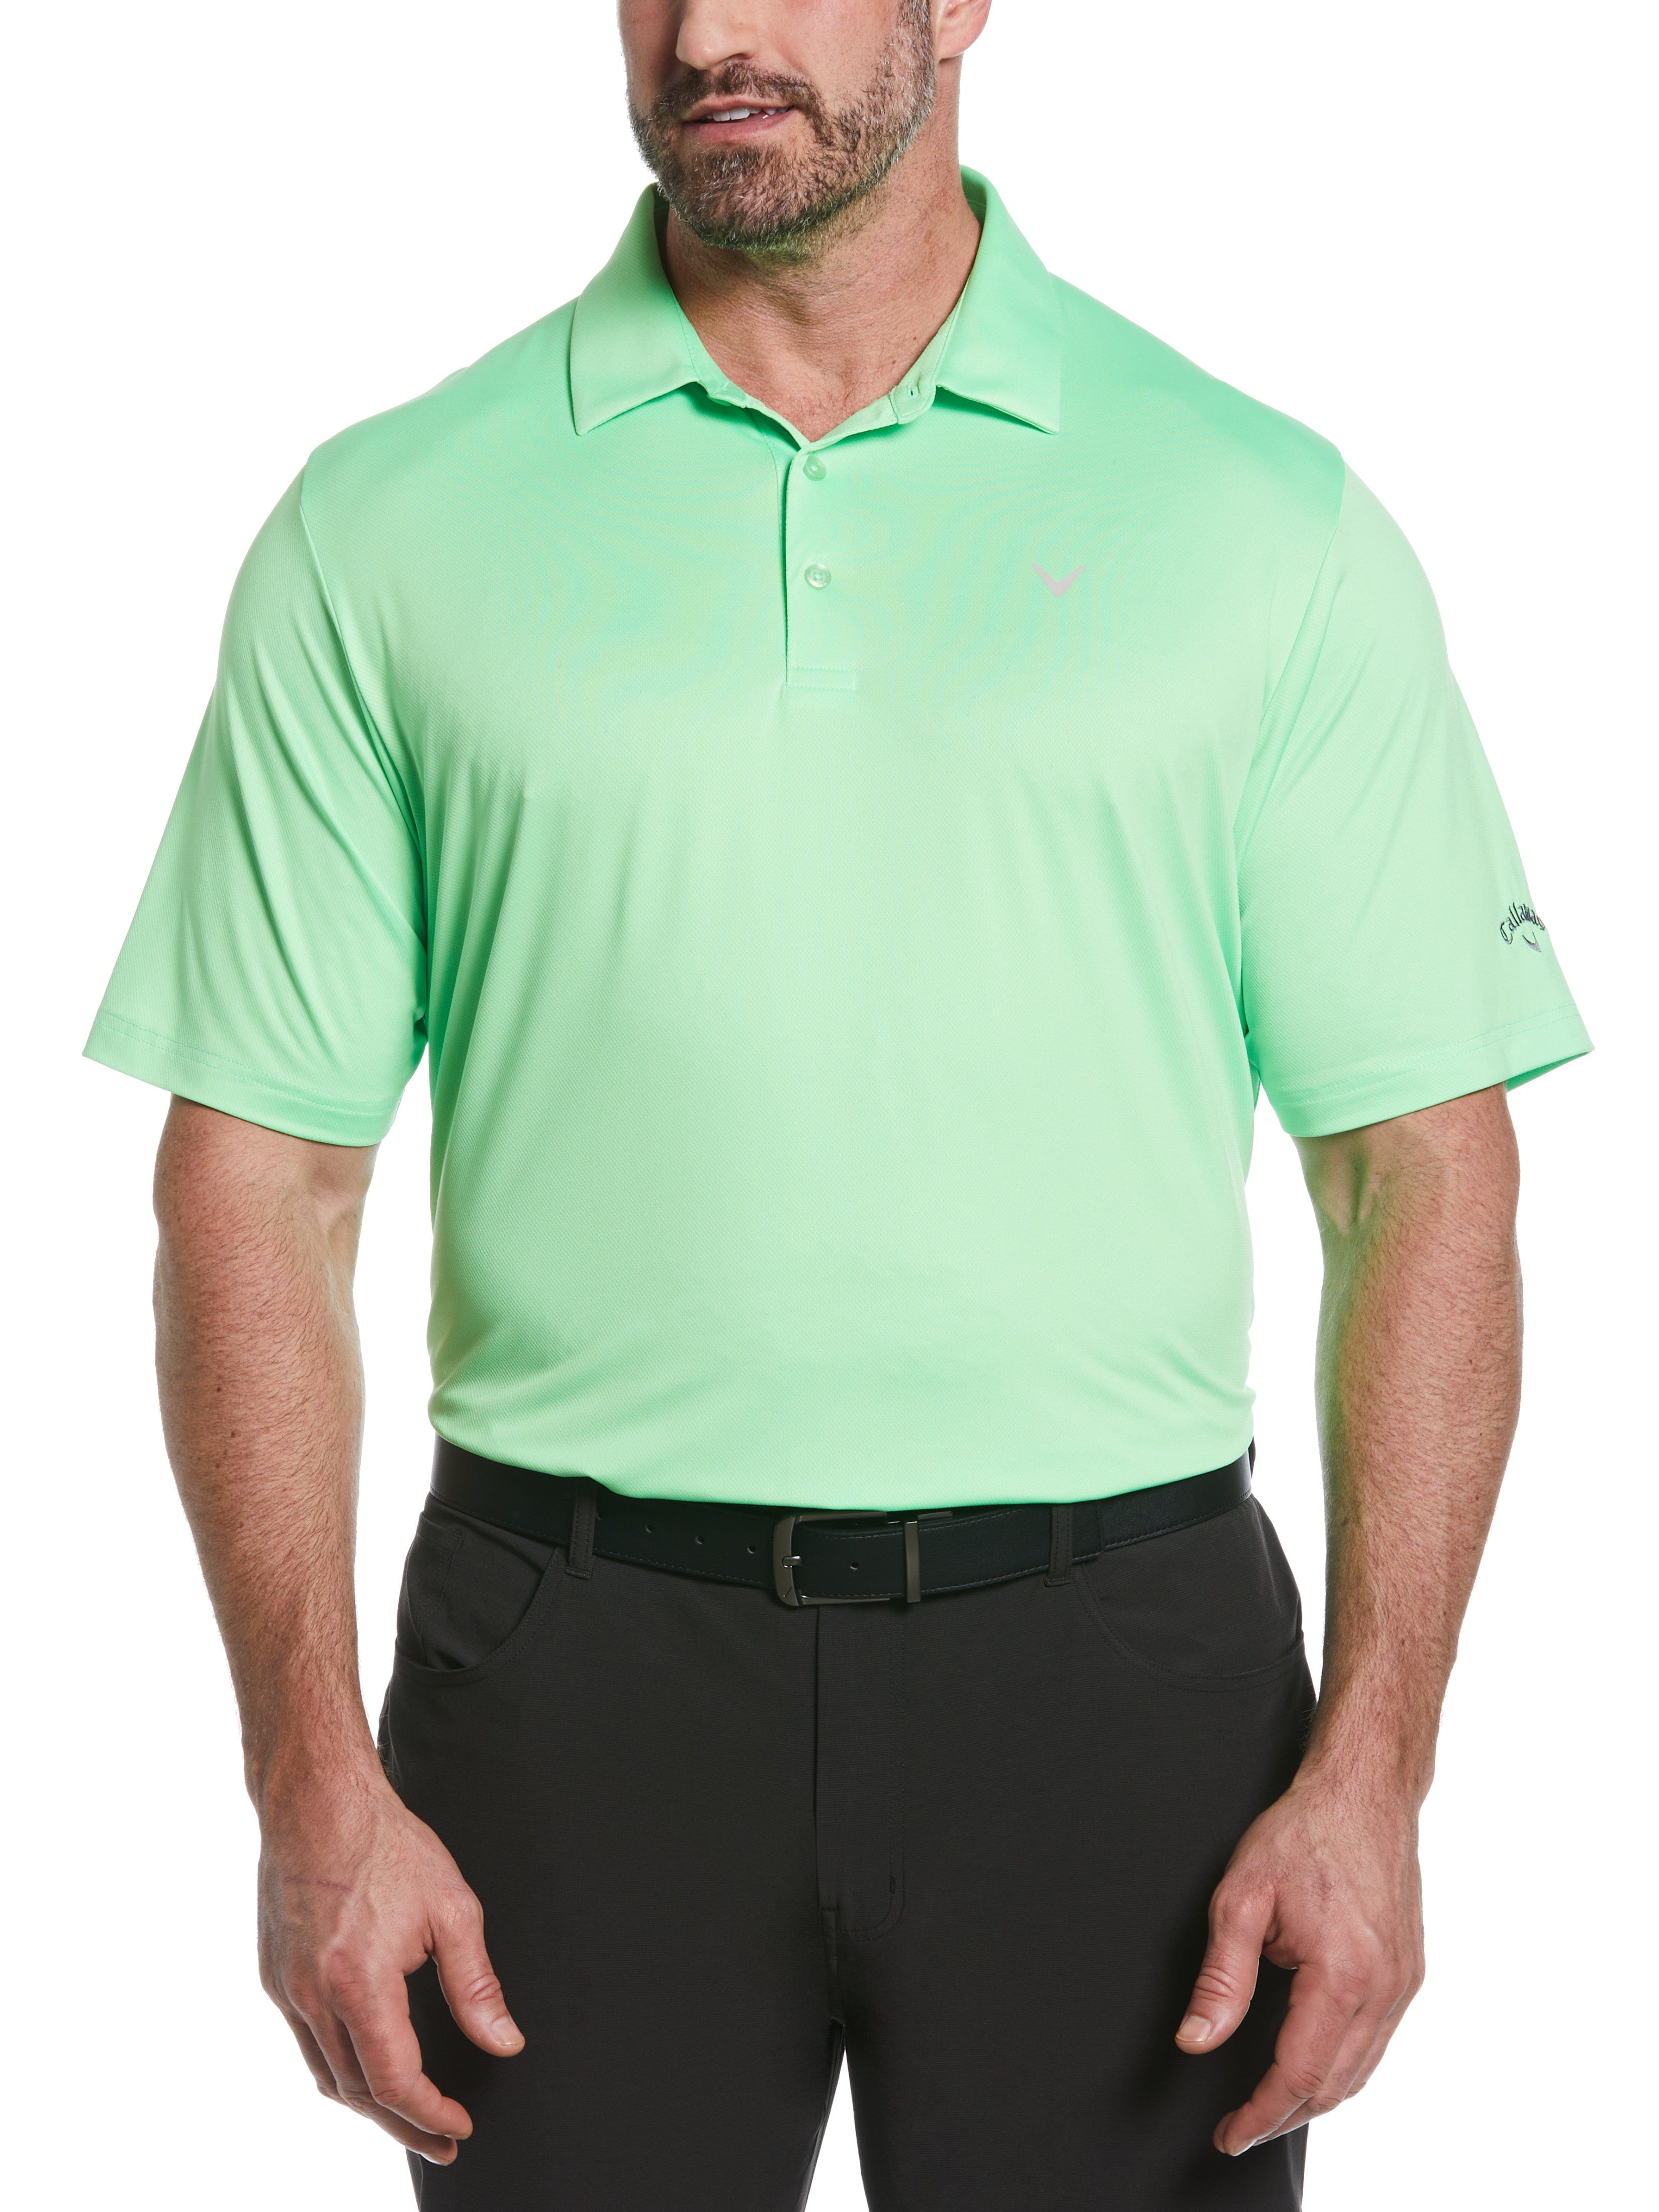 Callaway Apparel Mens Big & Tall Solid Swing Tech Golf Polo Shirt, Size 5XLT, Summer Green, Polyester/Elastane | Golf Apparel Shop